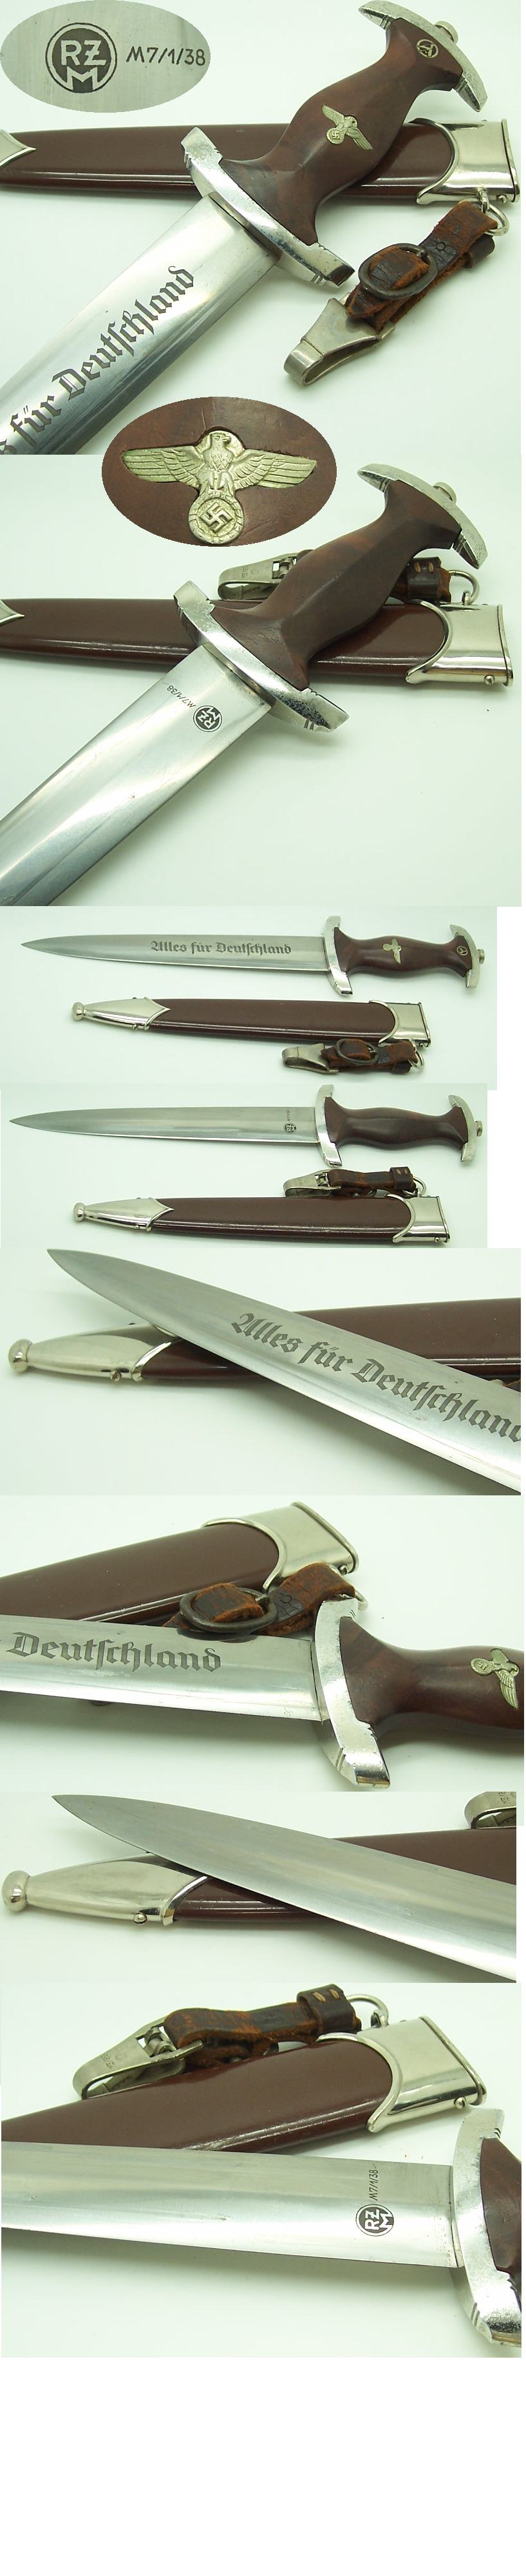 RZM M7/1 (Christianswerk) SA Dagger